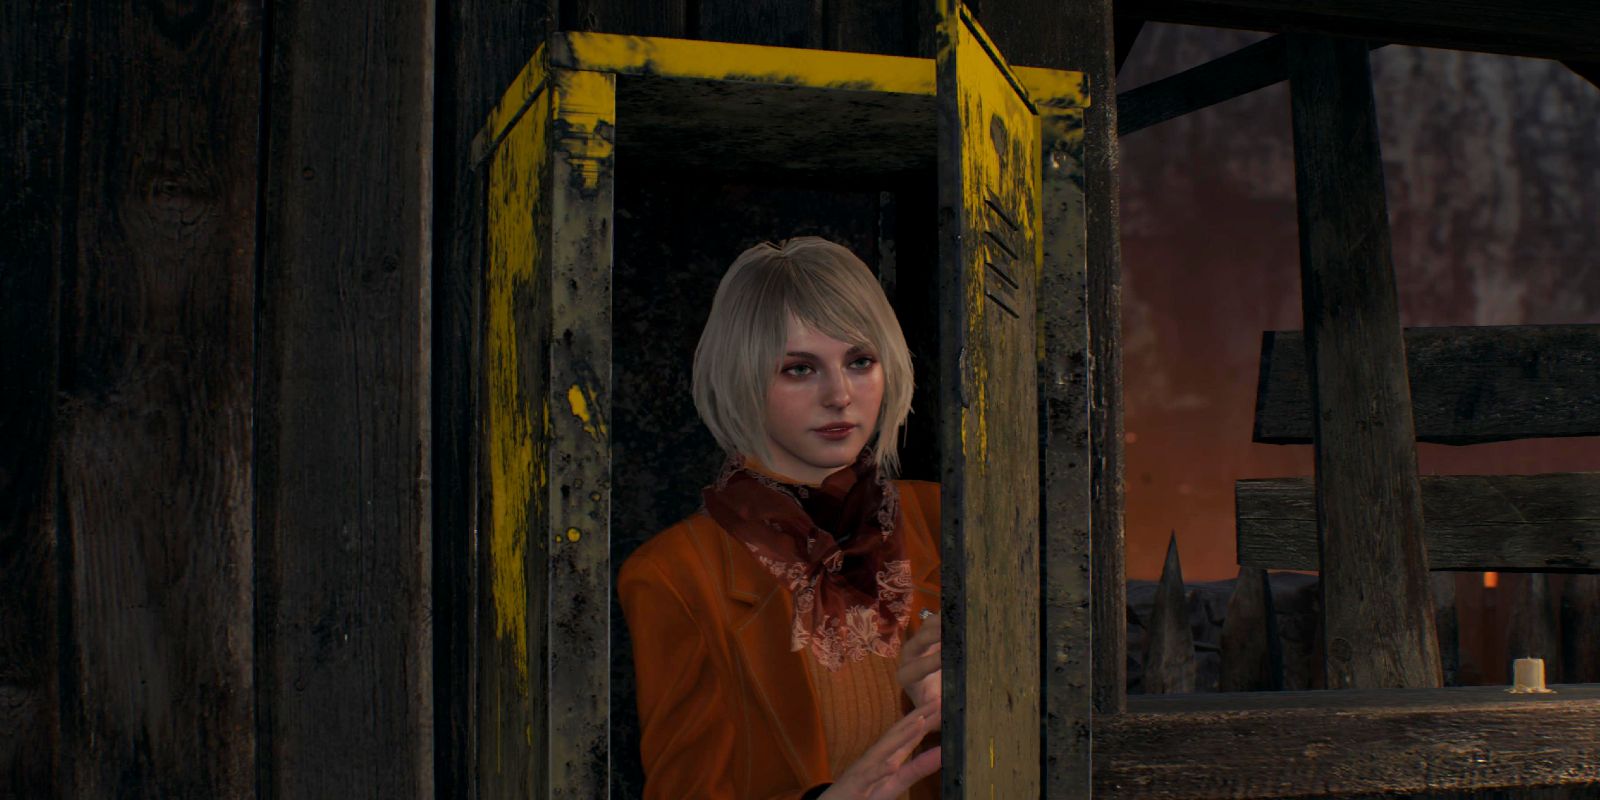 Ashley from Resident Evil 4 hiding in a storage locker